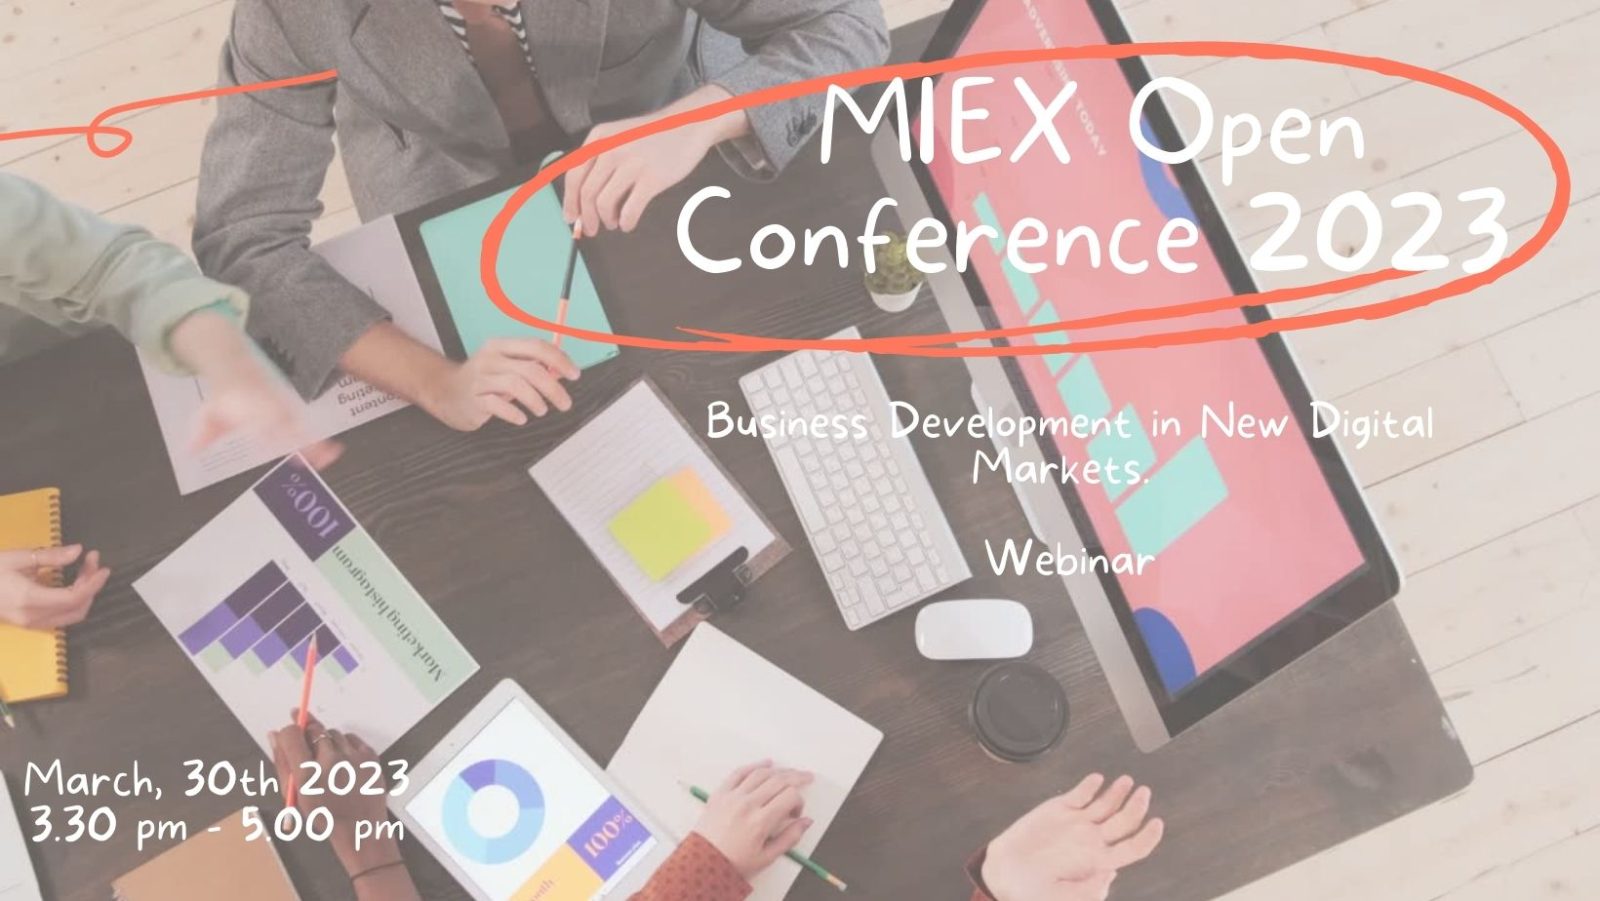 MIEX Open Conference 2023